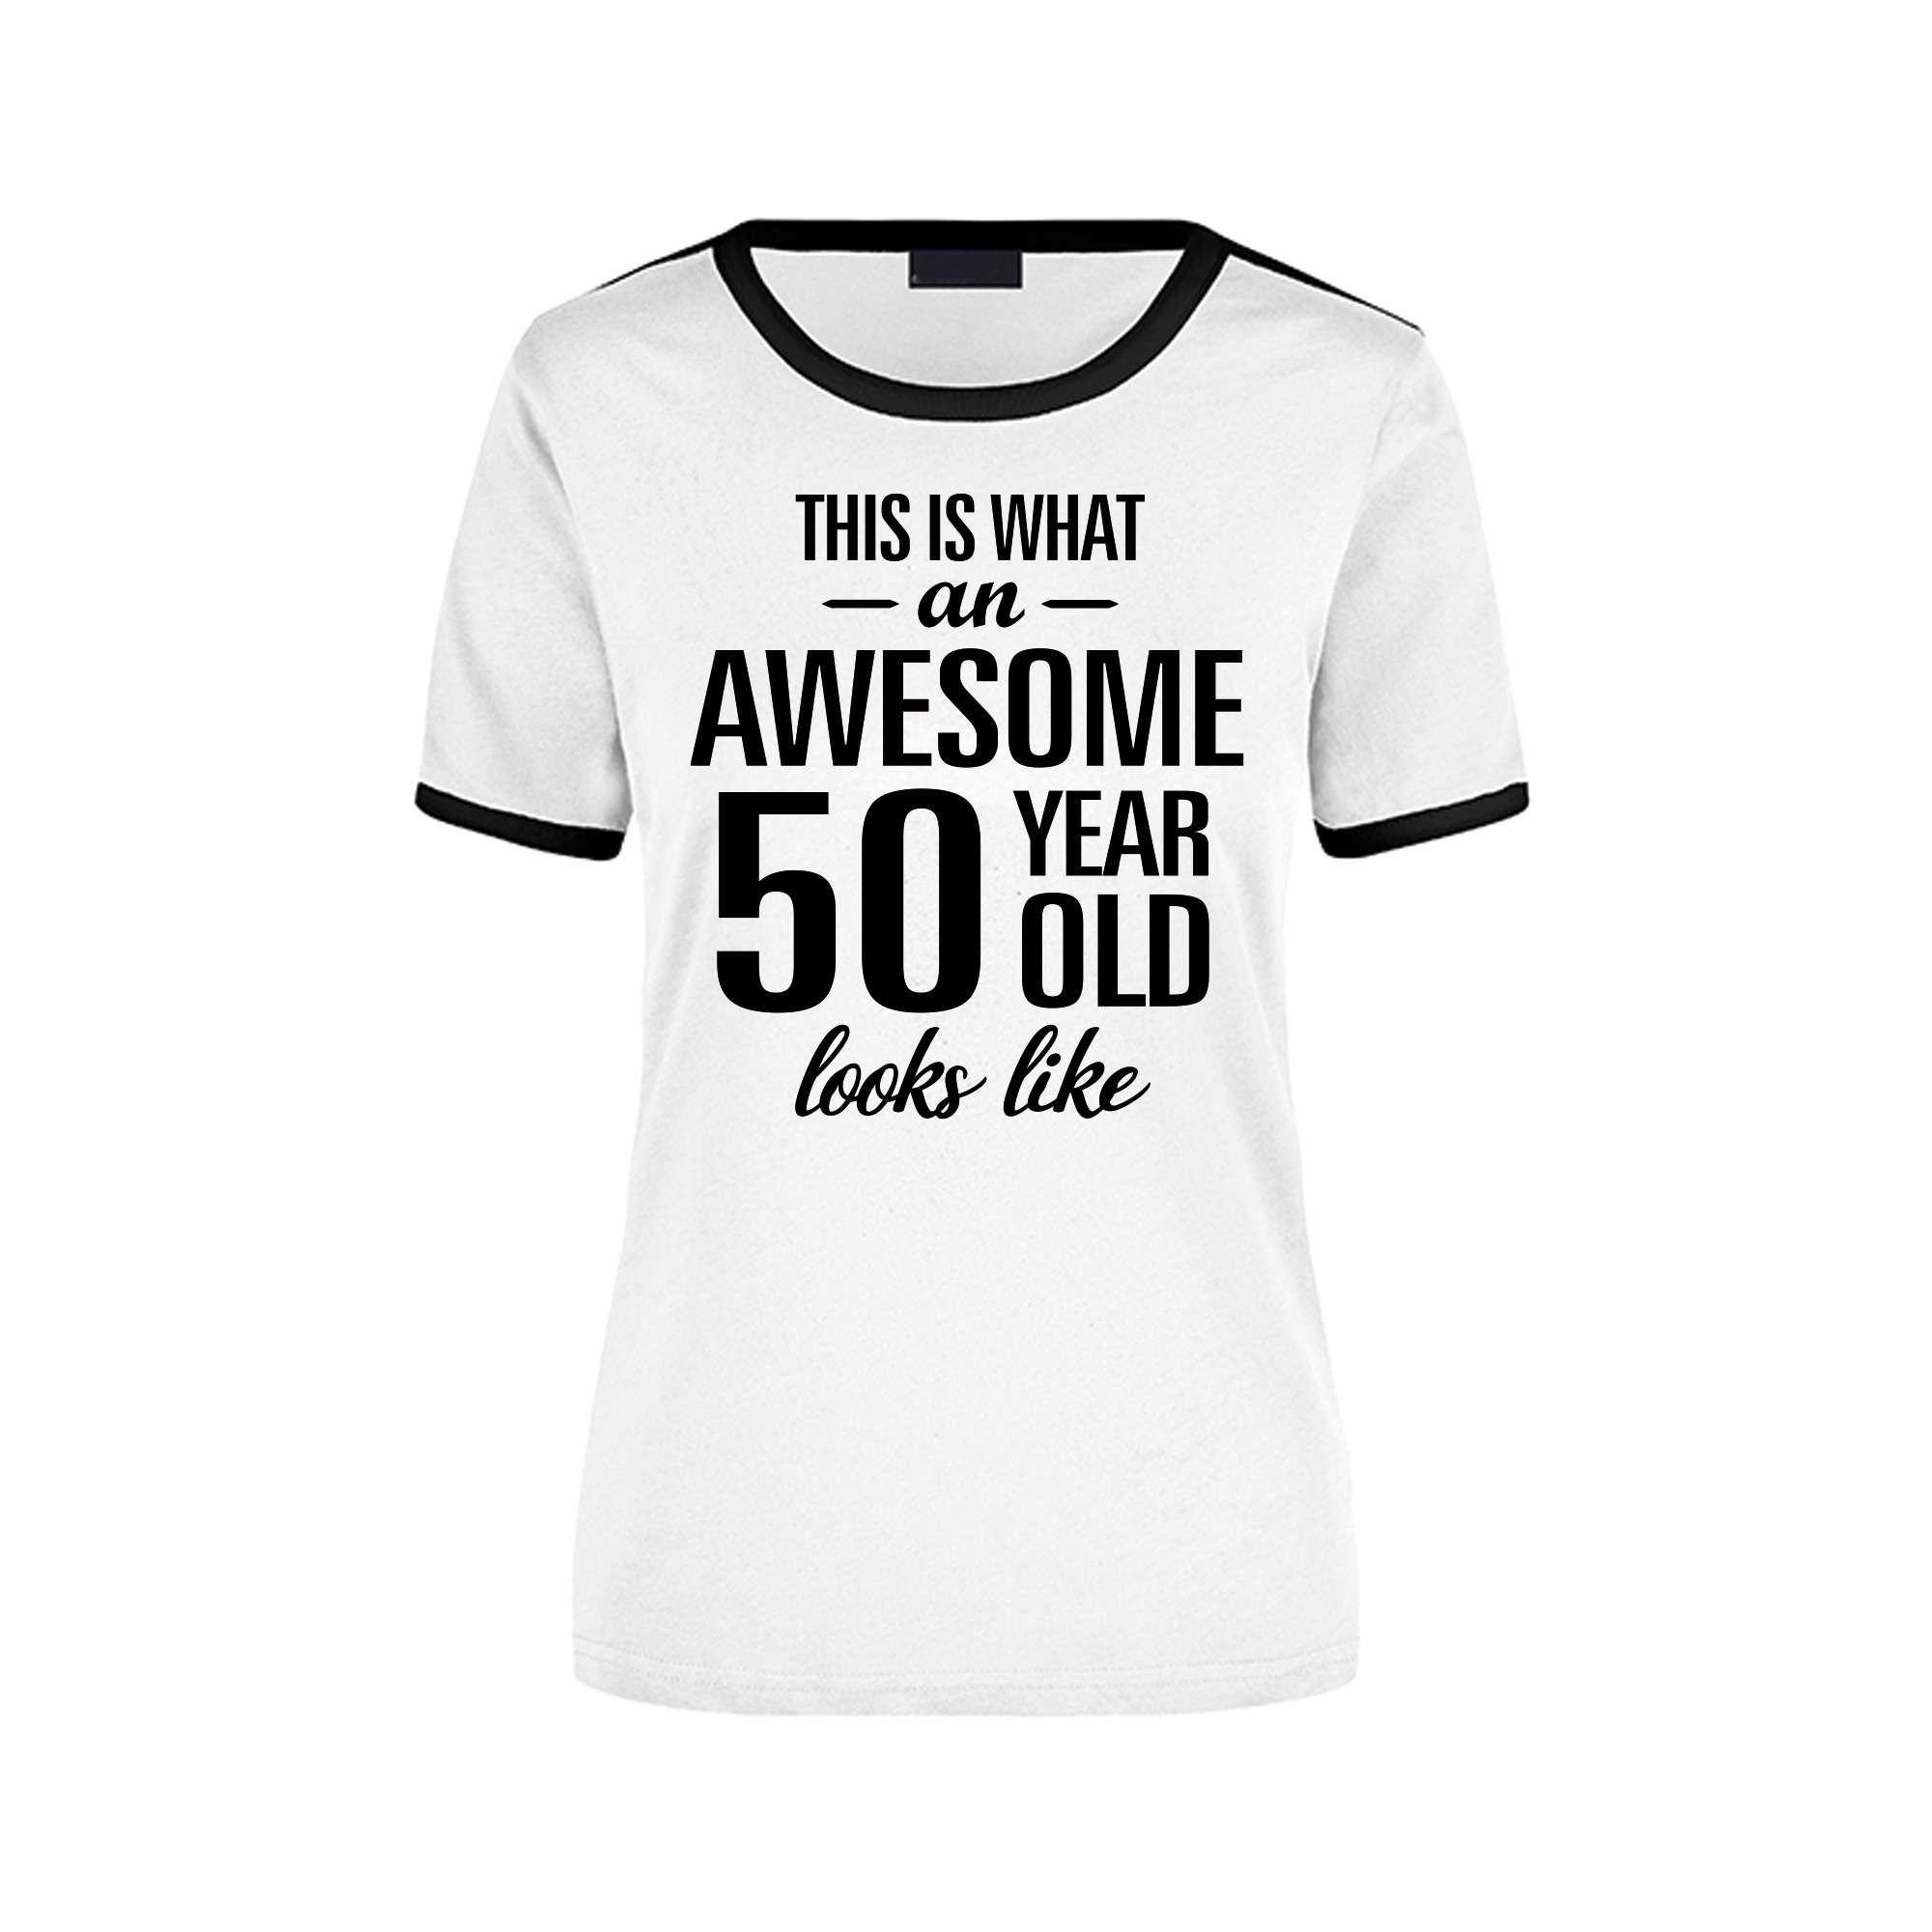 Awesome 50 year-50 jaar wit-zwart ringer cadeau t-shirt voor dames Sarah